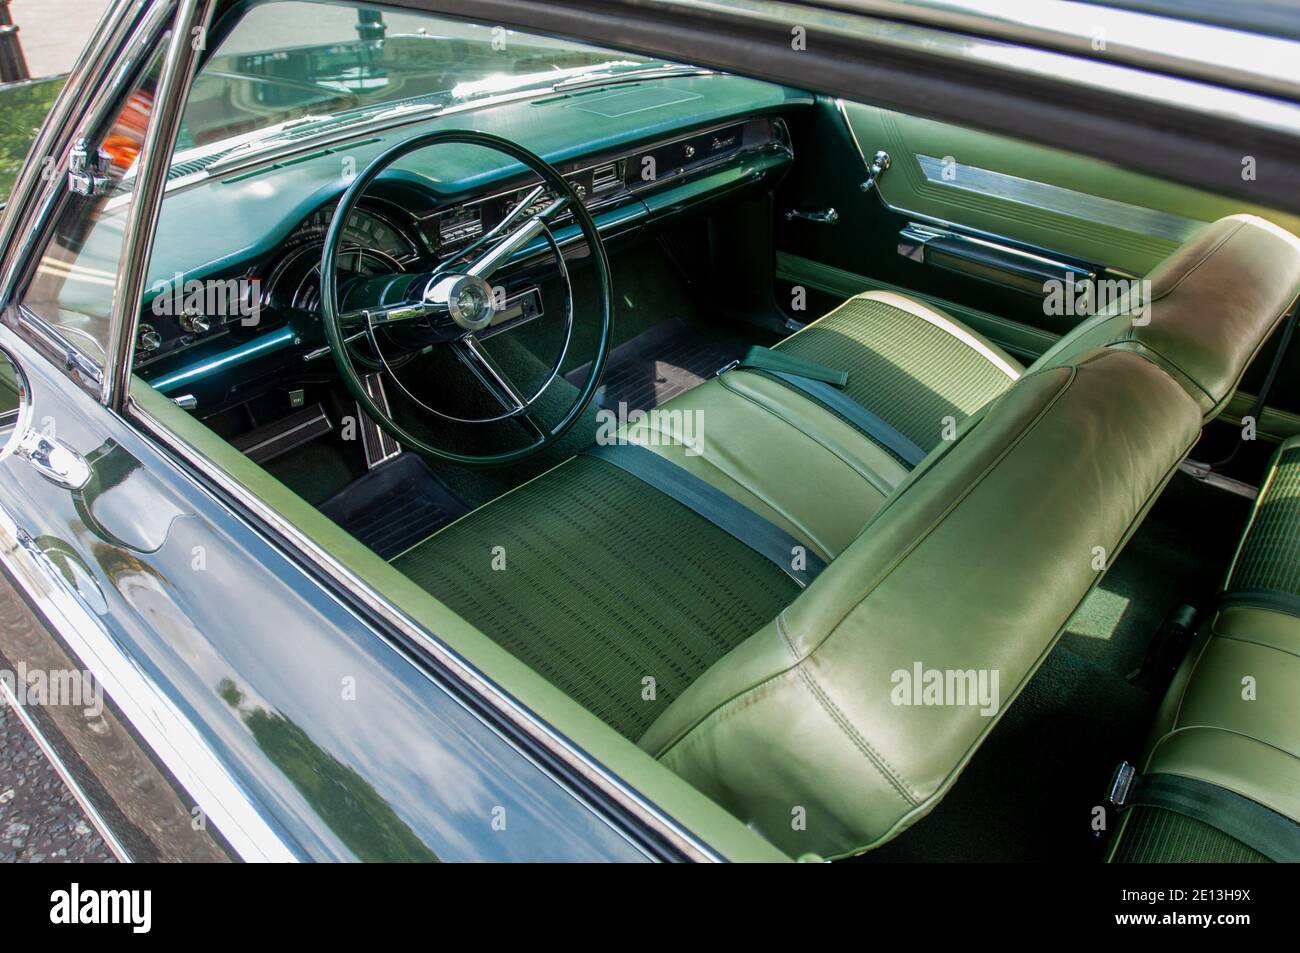 1960s Chrysler Newport, full size American 2 door sedan/coupe Stock Photo